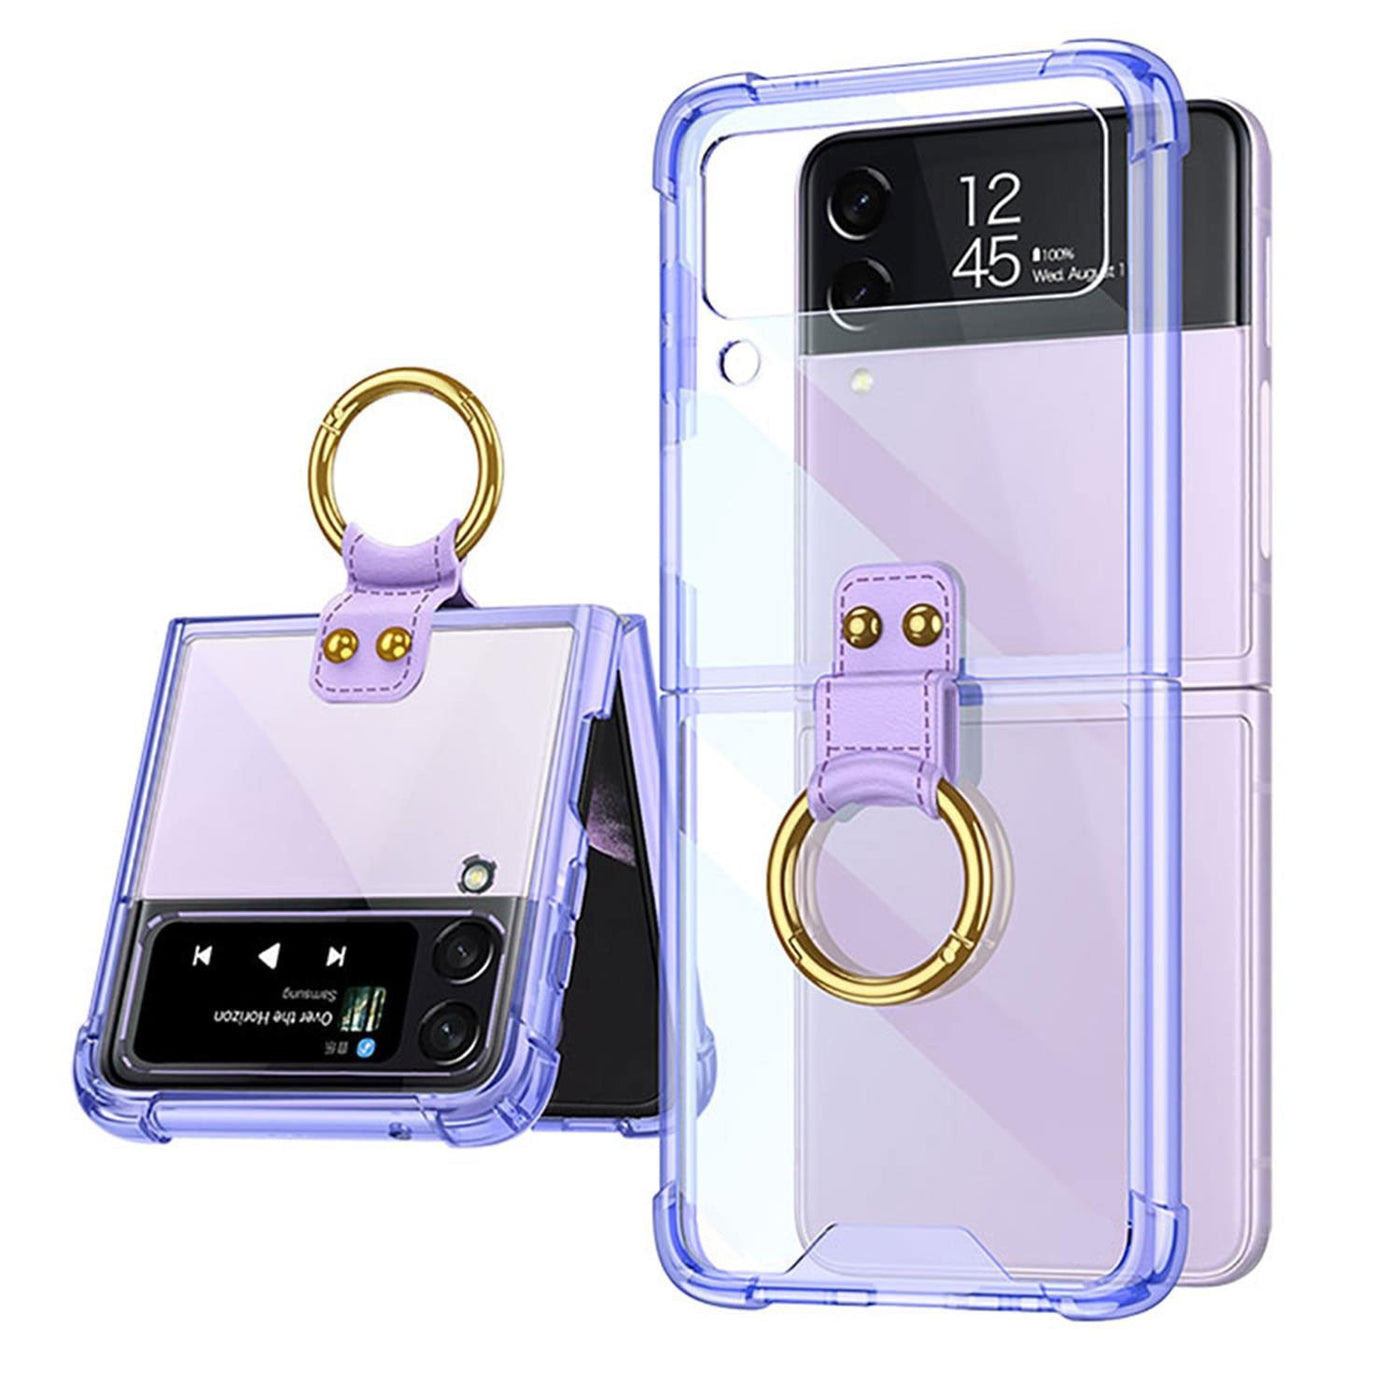 Transparent Case with Ring Bracket For Samsung Galaxy Z Flip 4 - Galaxy Z Flip 4 Case